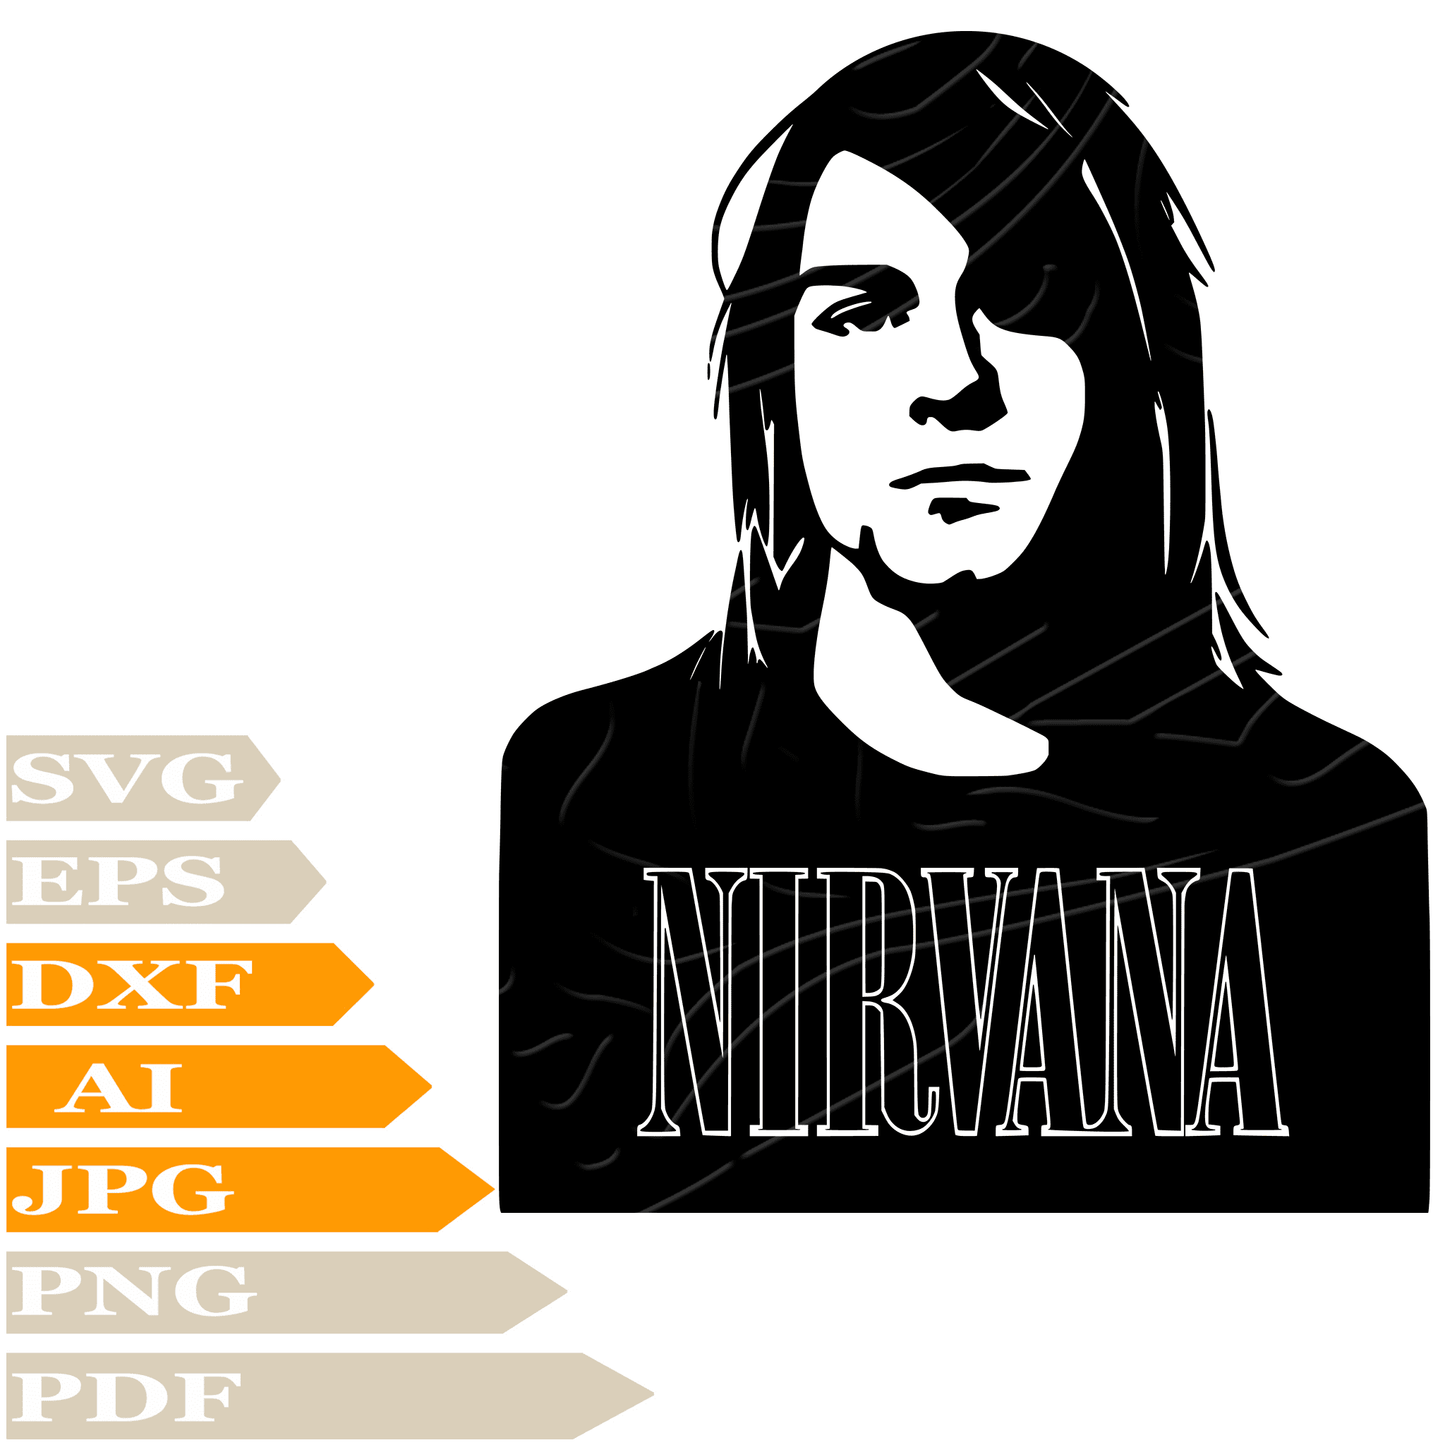 Kurt Cobain SVG File, Kurt Cobain Face SVG Design, Kurt Cobain Nirvana SVG Cricut, Kurt Cobain Digital Vector, PNG, Image Cut, Clipart, Cut File, Print, Decal, Shirt, Silhouette